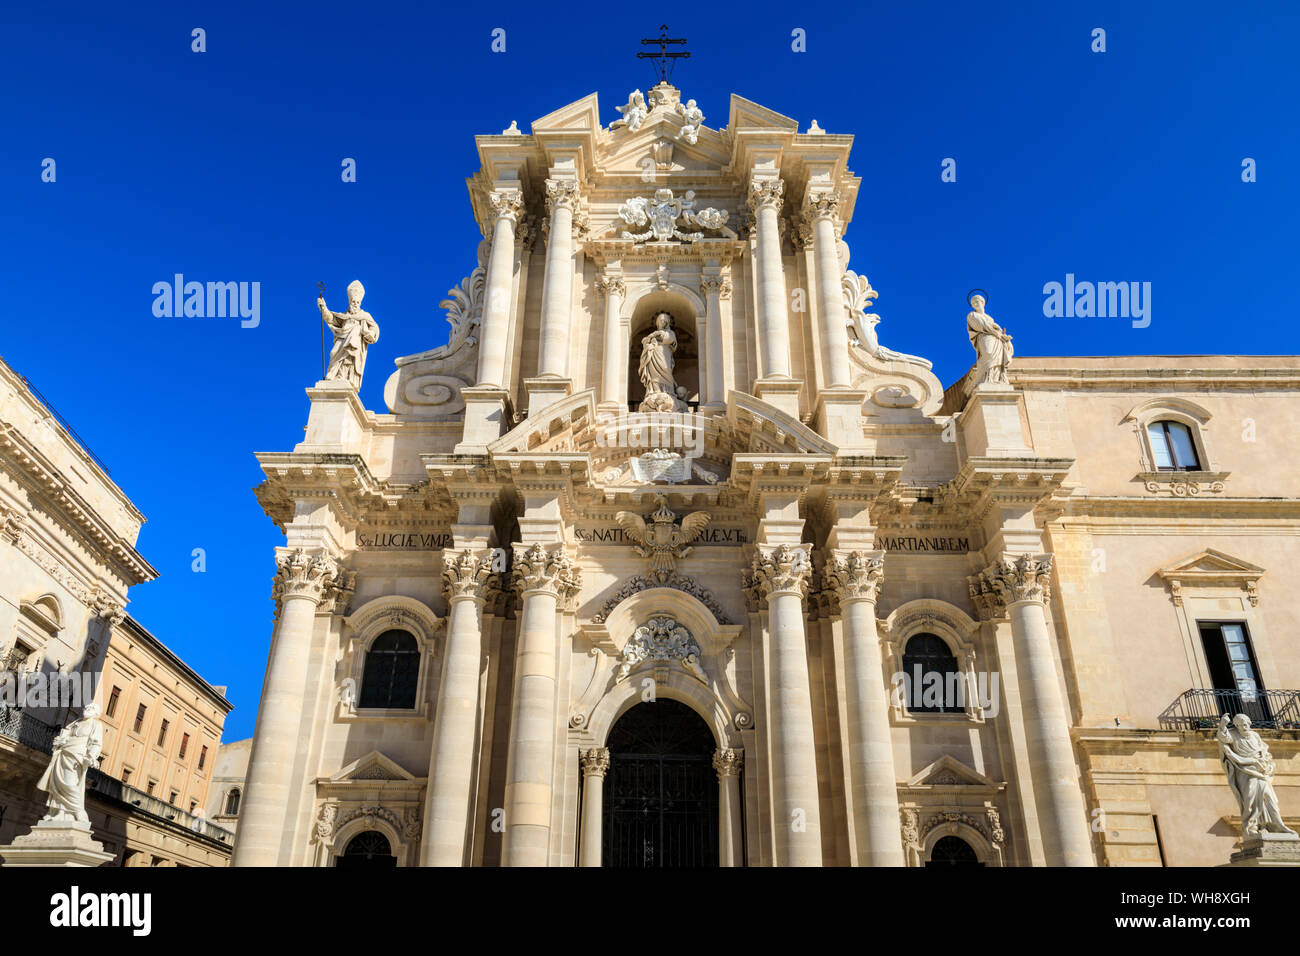 Cathedral, baroque facade, Piazza Duomo, Ortigia (Ortygia), Syracuse (Siracusa), UNESCO World Heritage Site, Sicily, Italy, Mediterranean, Europe Stock Photo